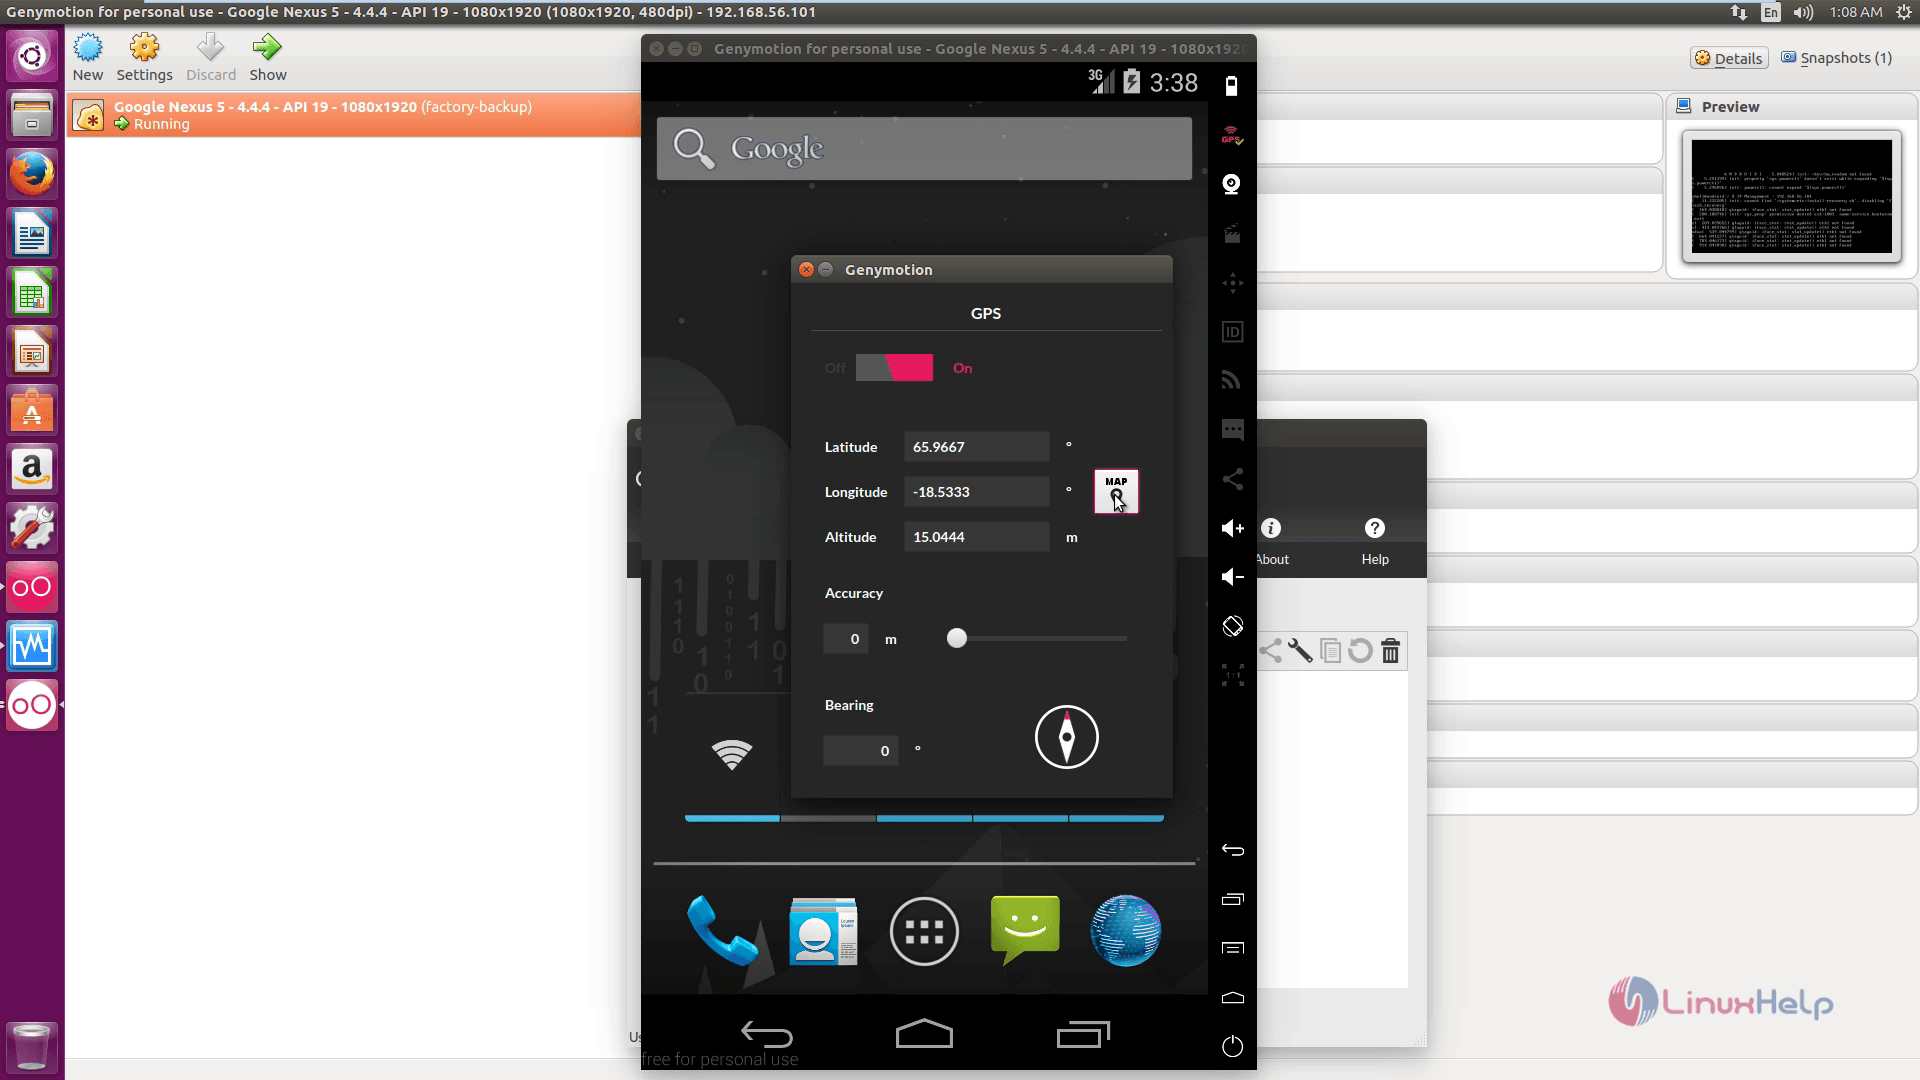 run-Android-Apps-Ubuntu-Genymotion-Emulator-testing-and-presentation-view-satellite